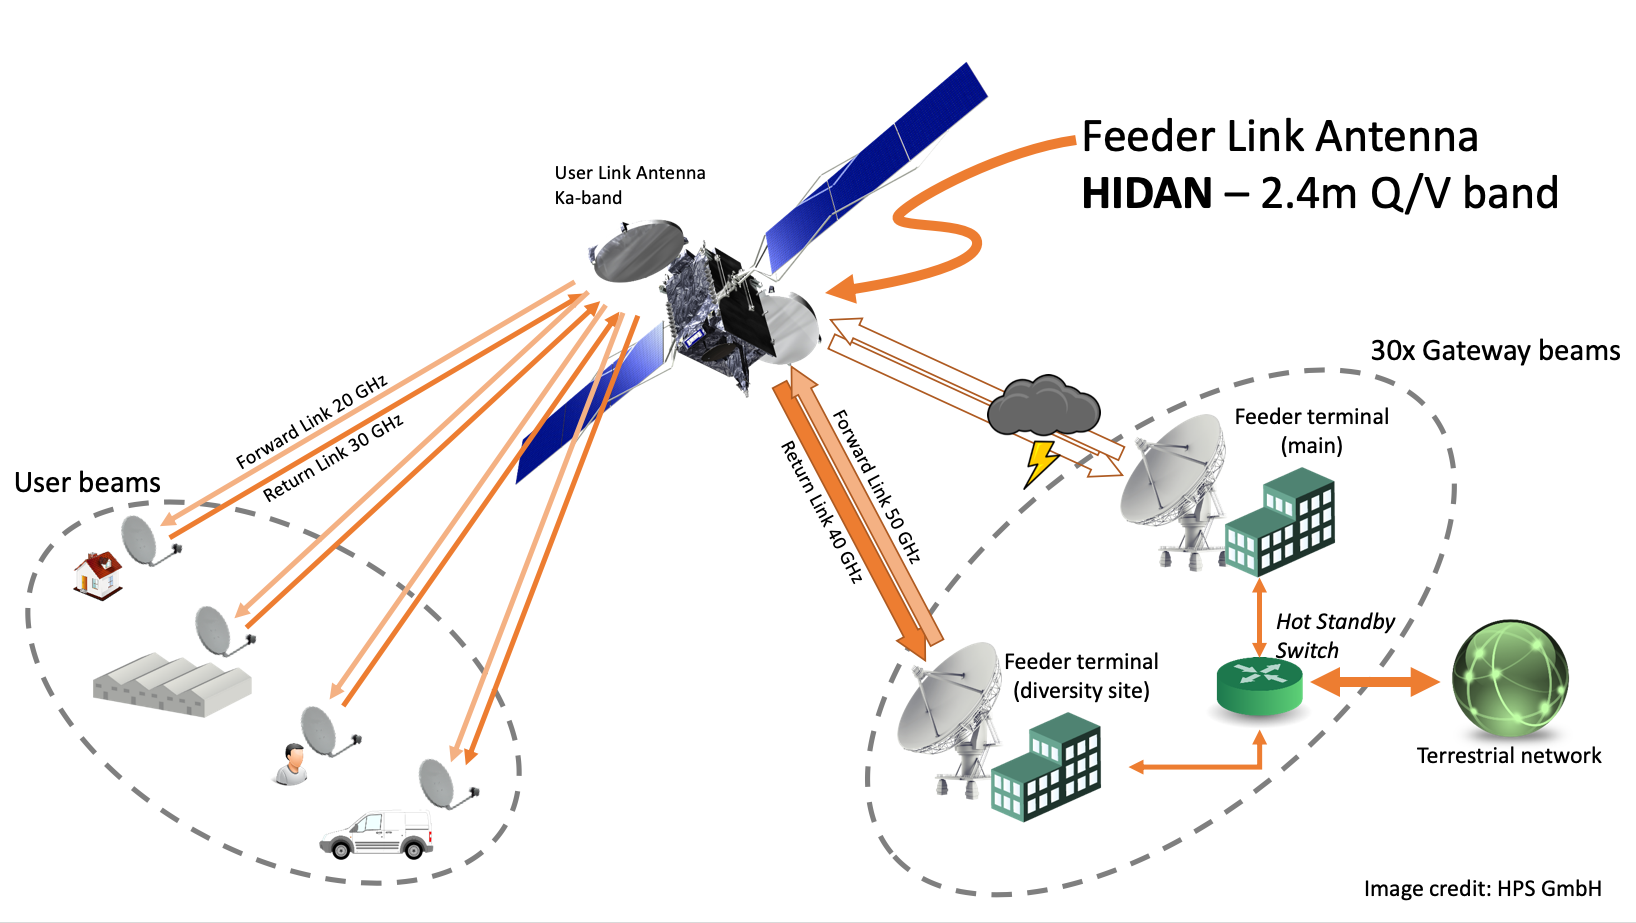 Feeder Link Antenna HIDAN – 2.4m Q/V band - Topology